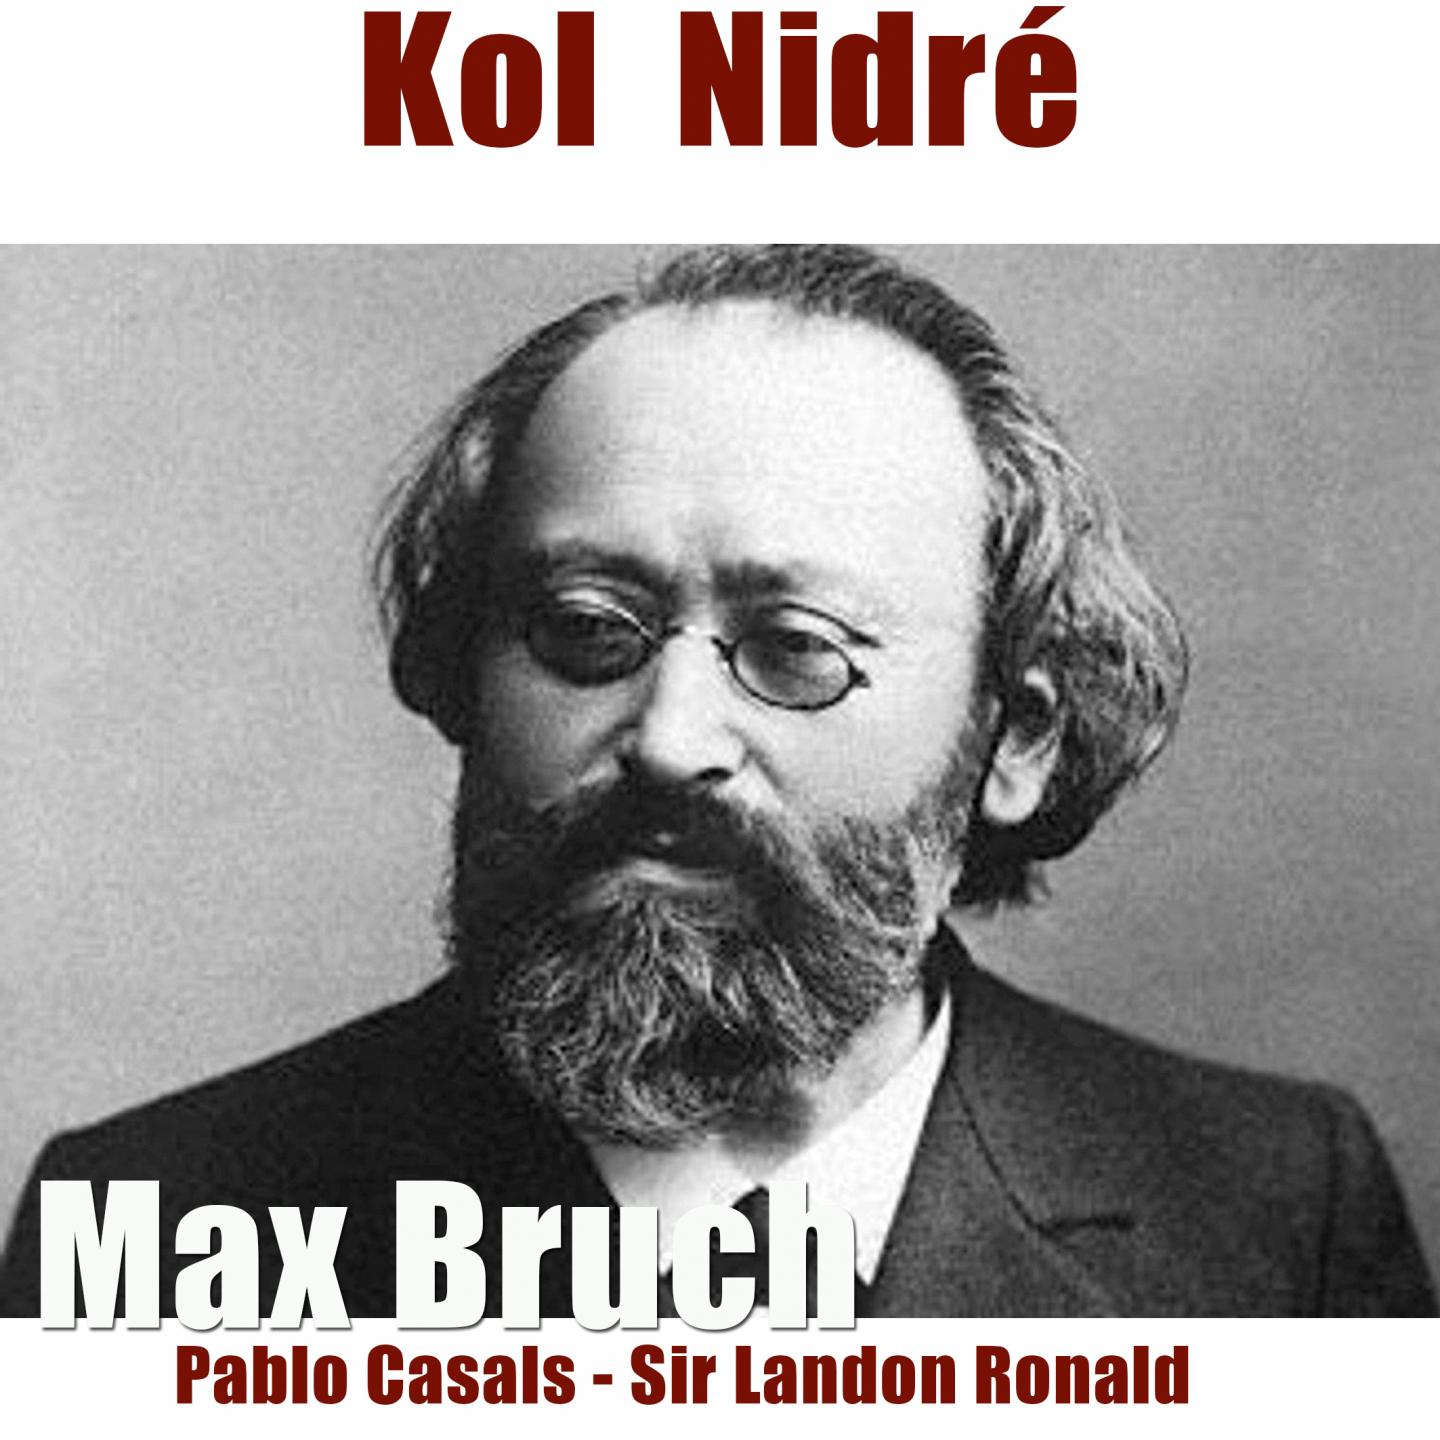 Kol Nidre, Op. 47